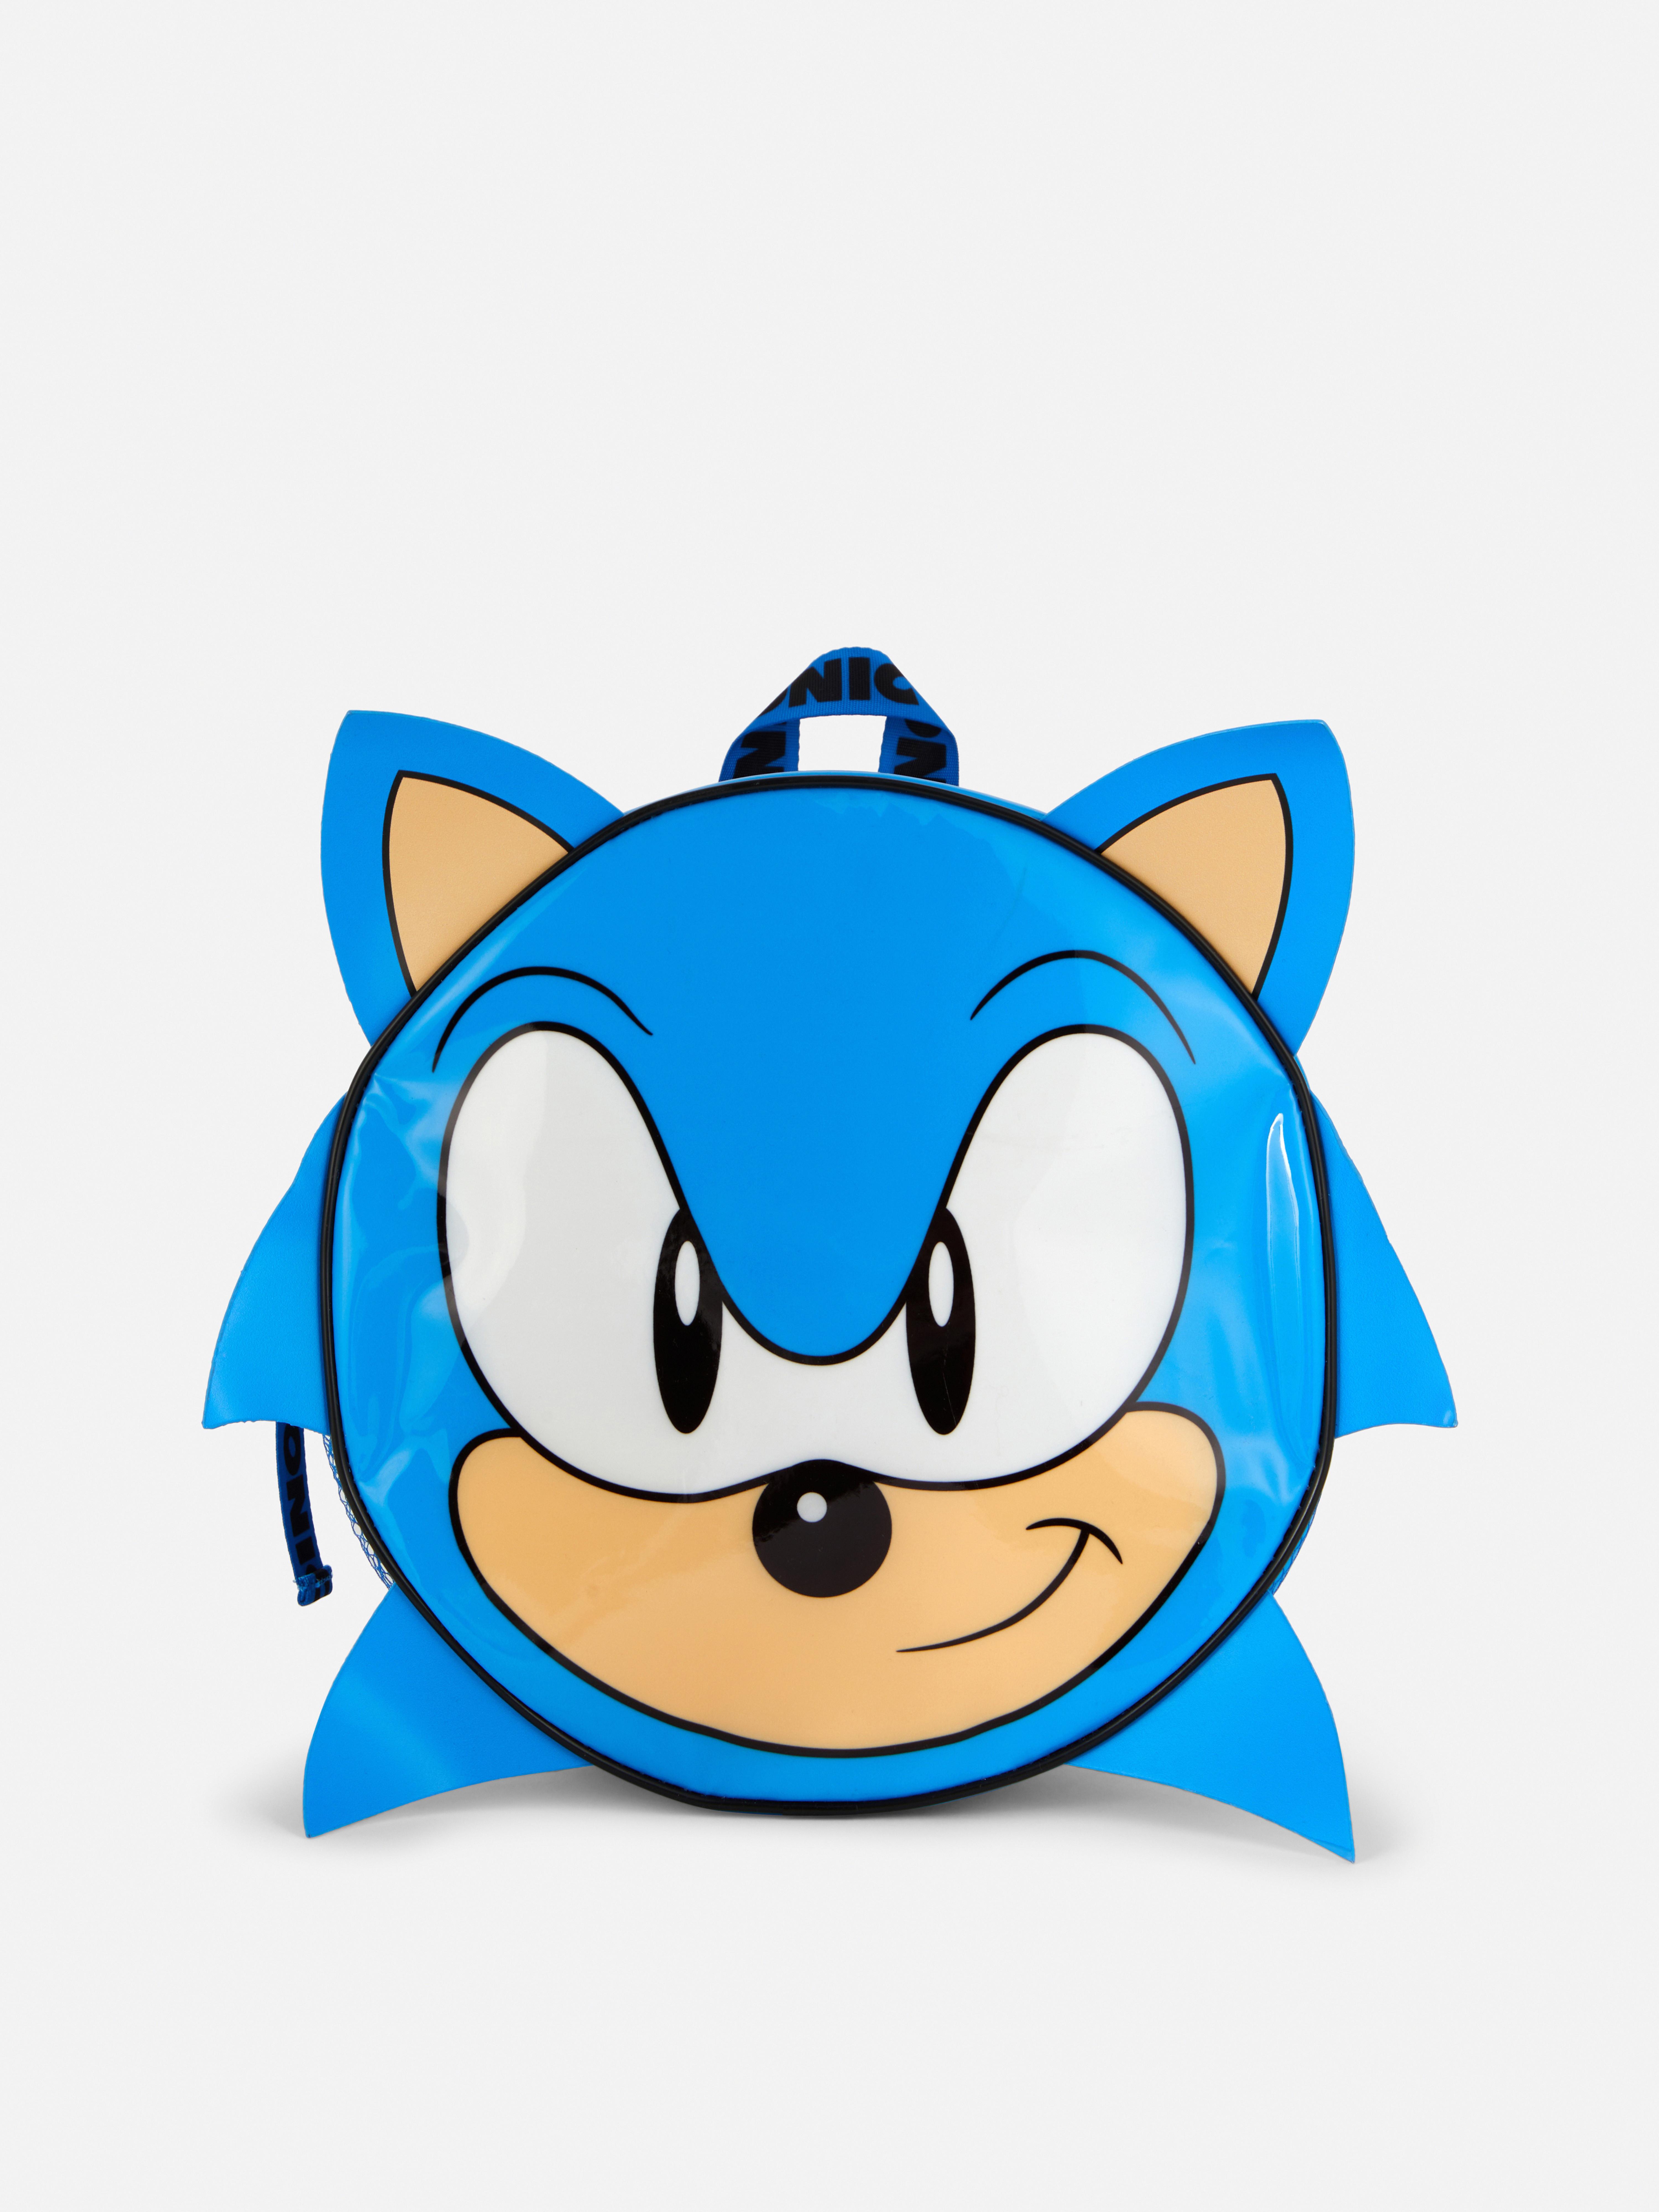 Sonic The Hedgehog Backpack